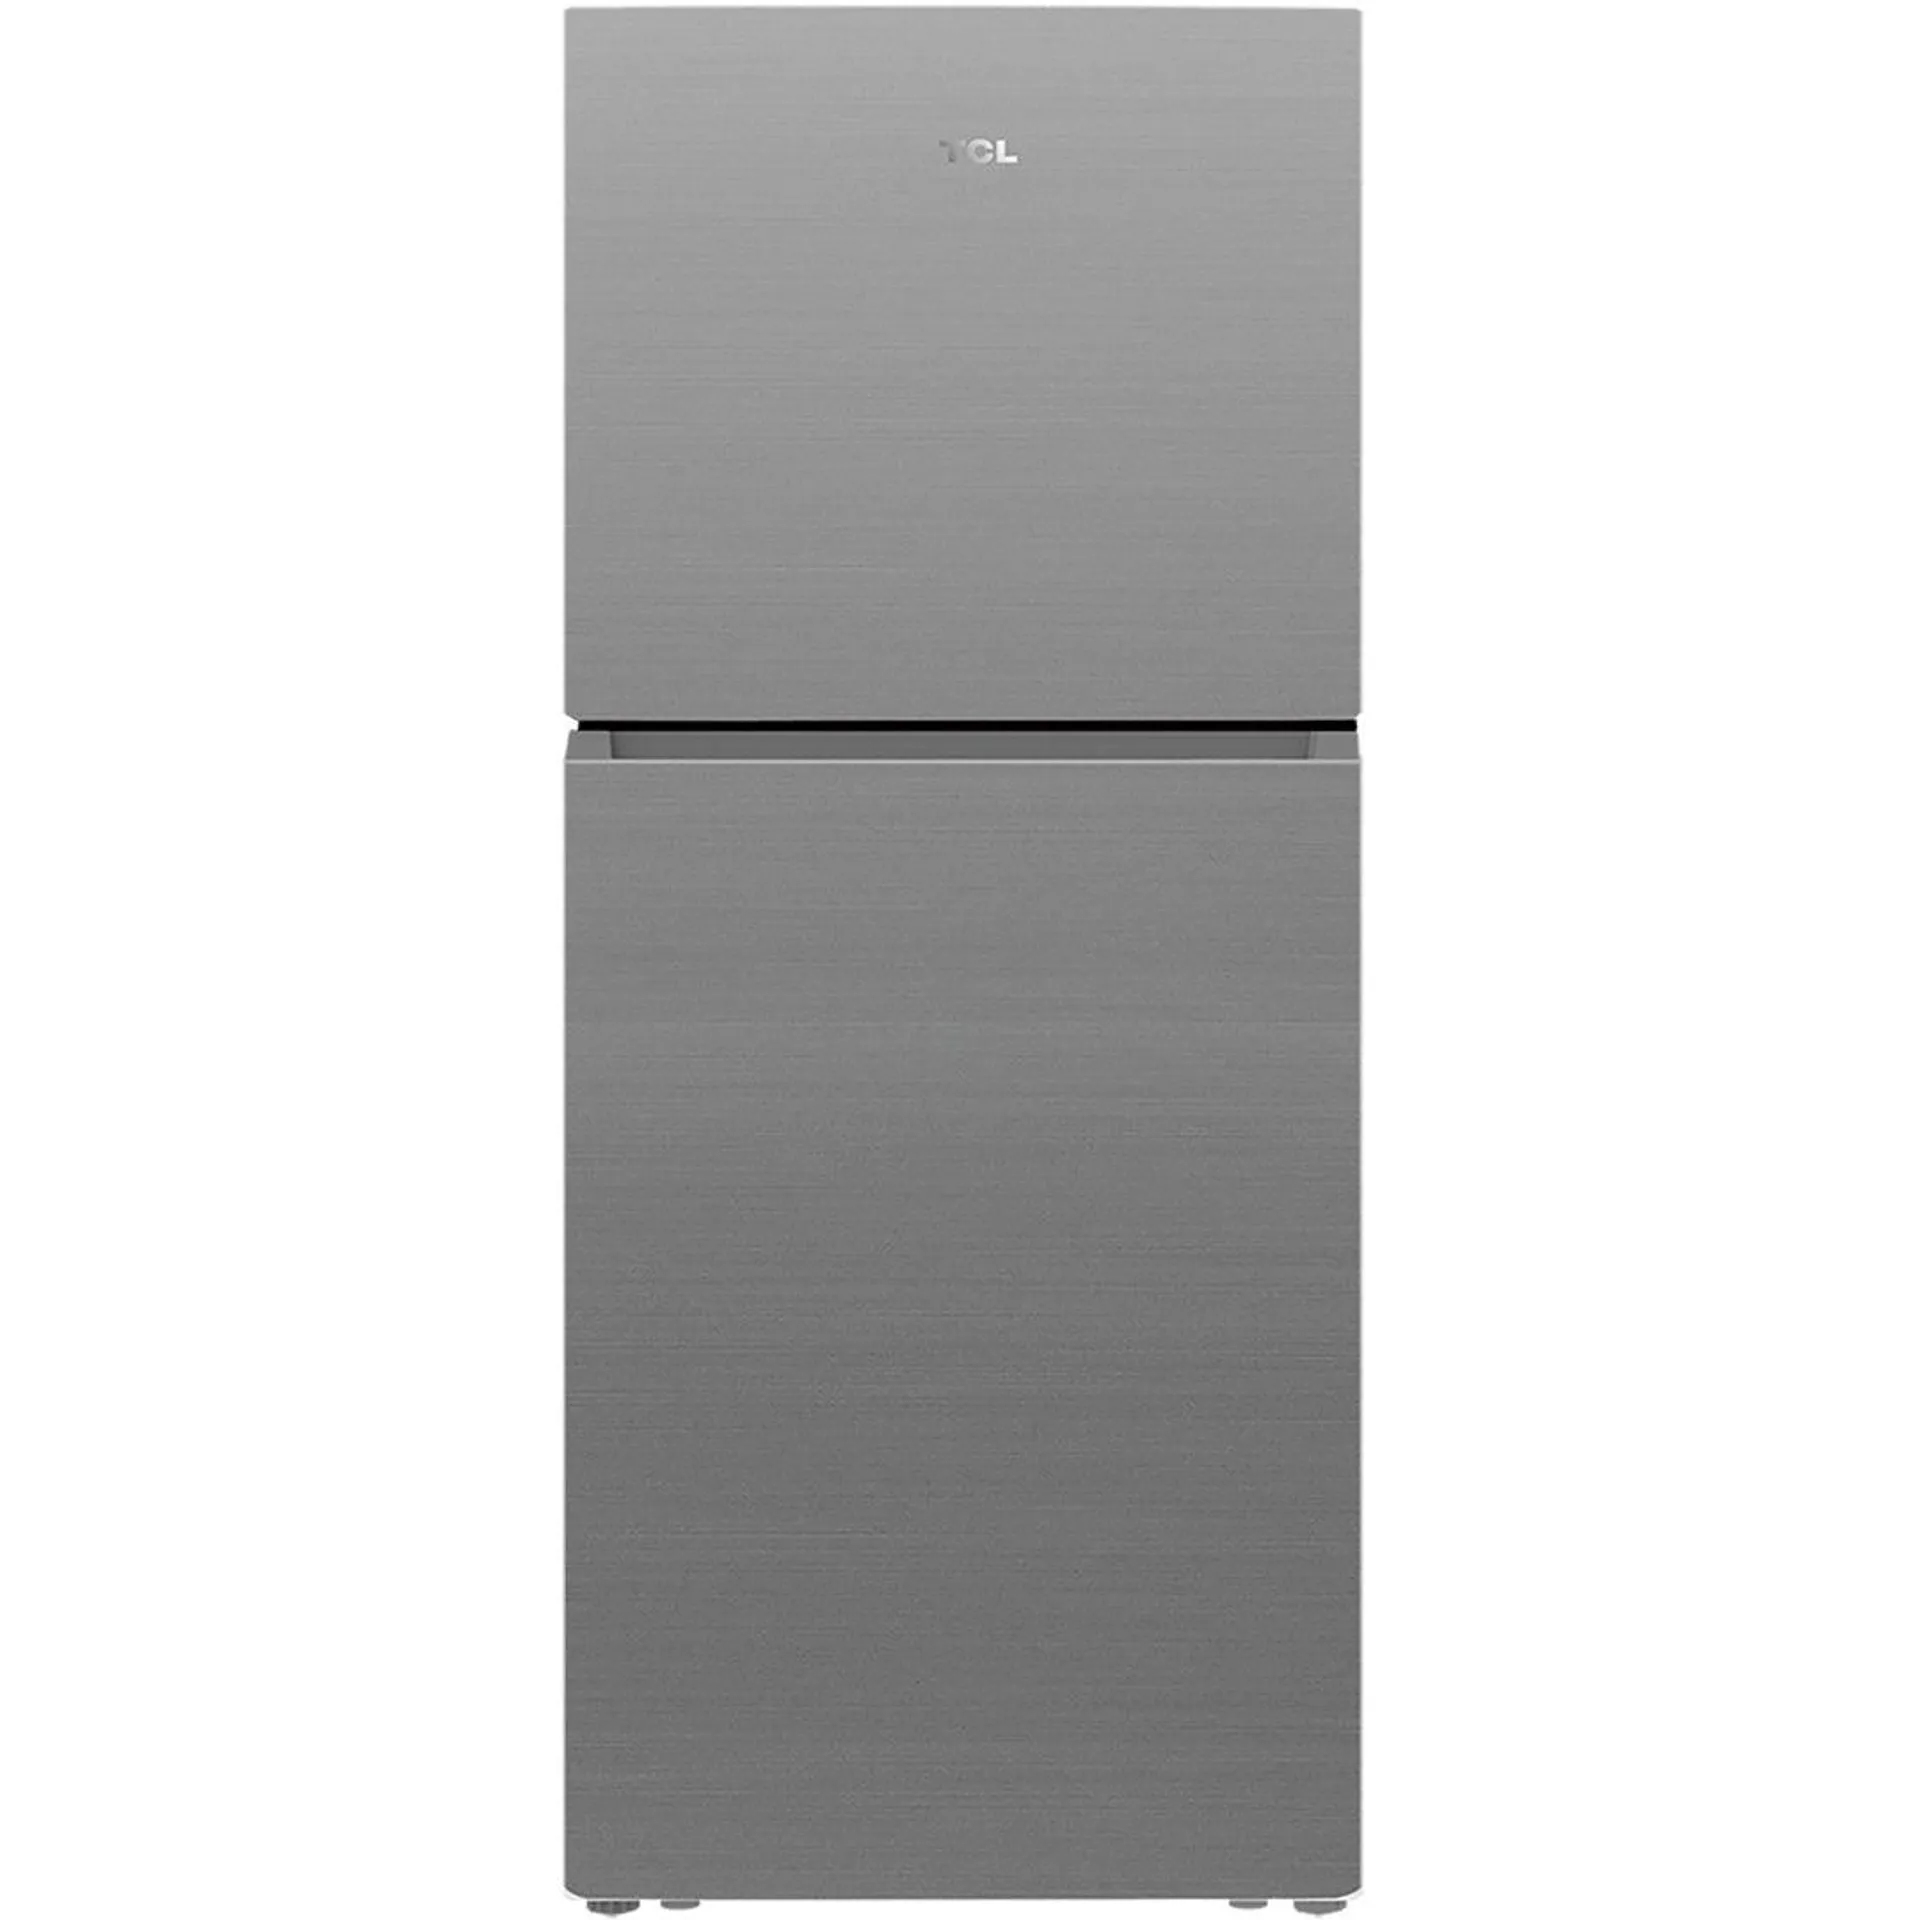 TCL 420L Top Mount Refrigerator Grey